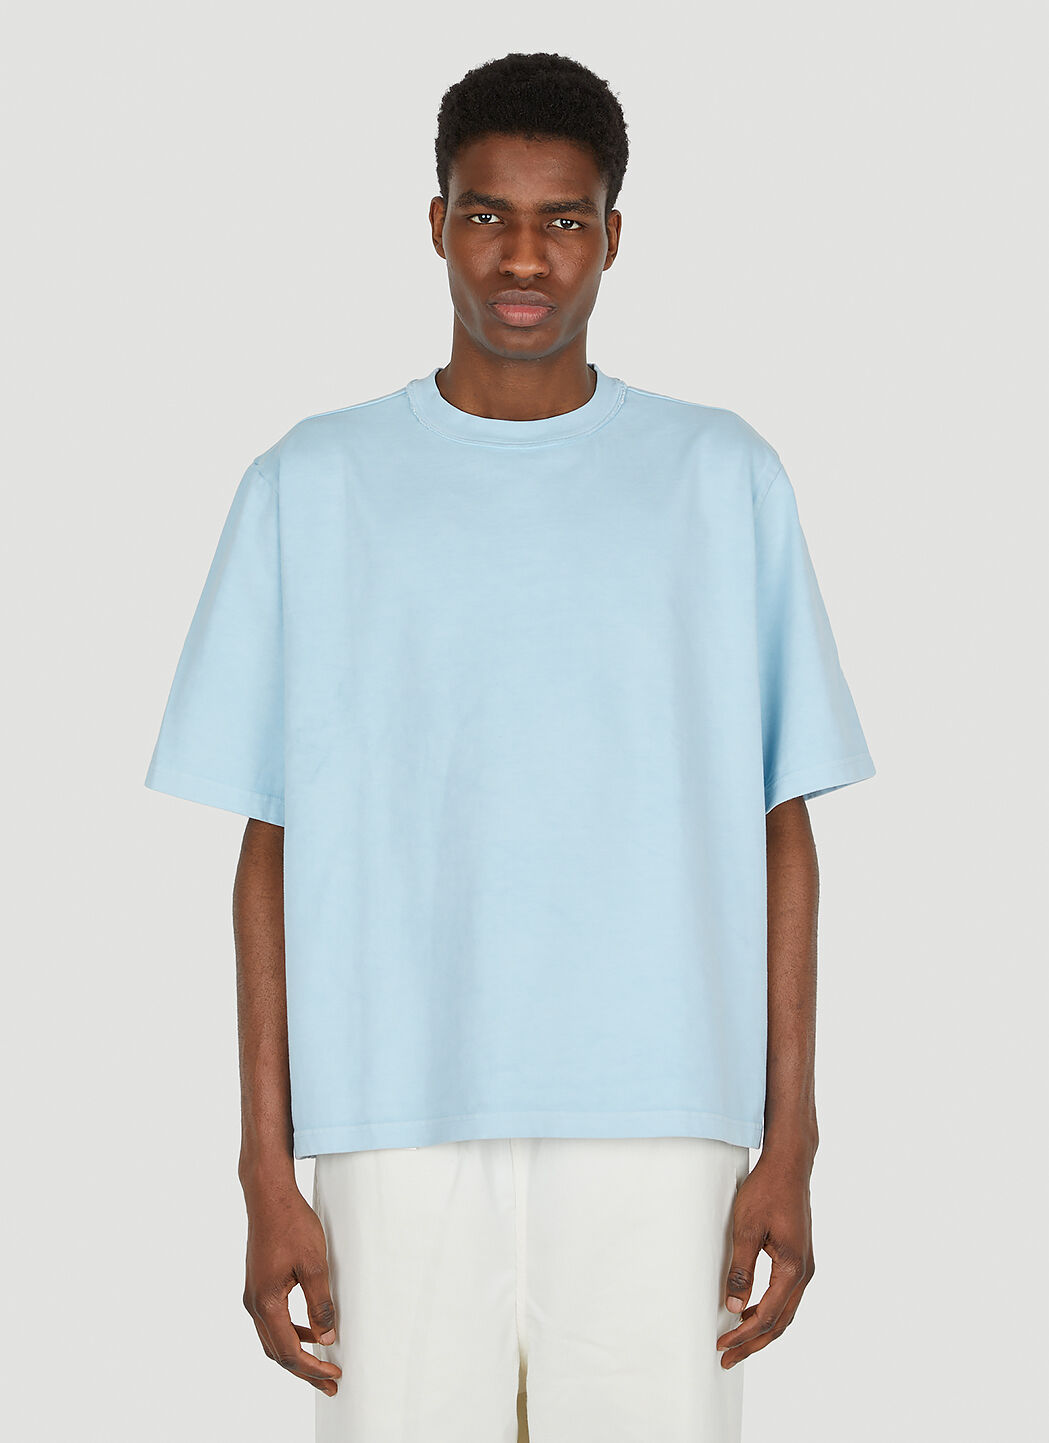 Camiel Fortgens Short Sleeve Big Fit T-Shirt in Light Blue | LN-CC®